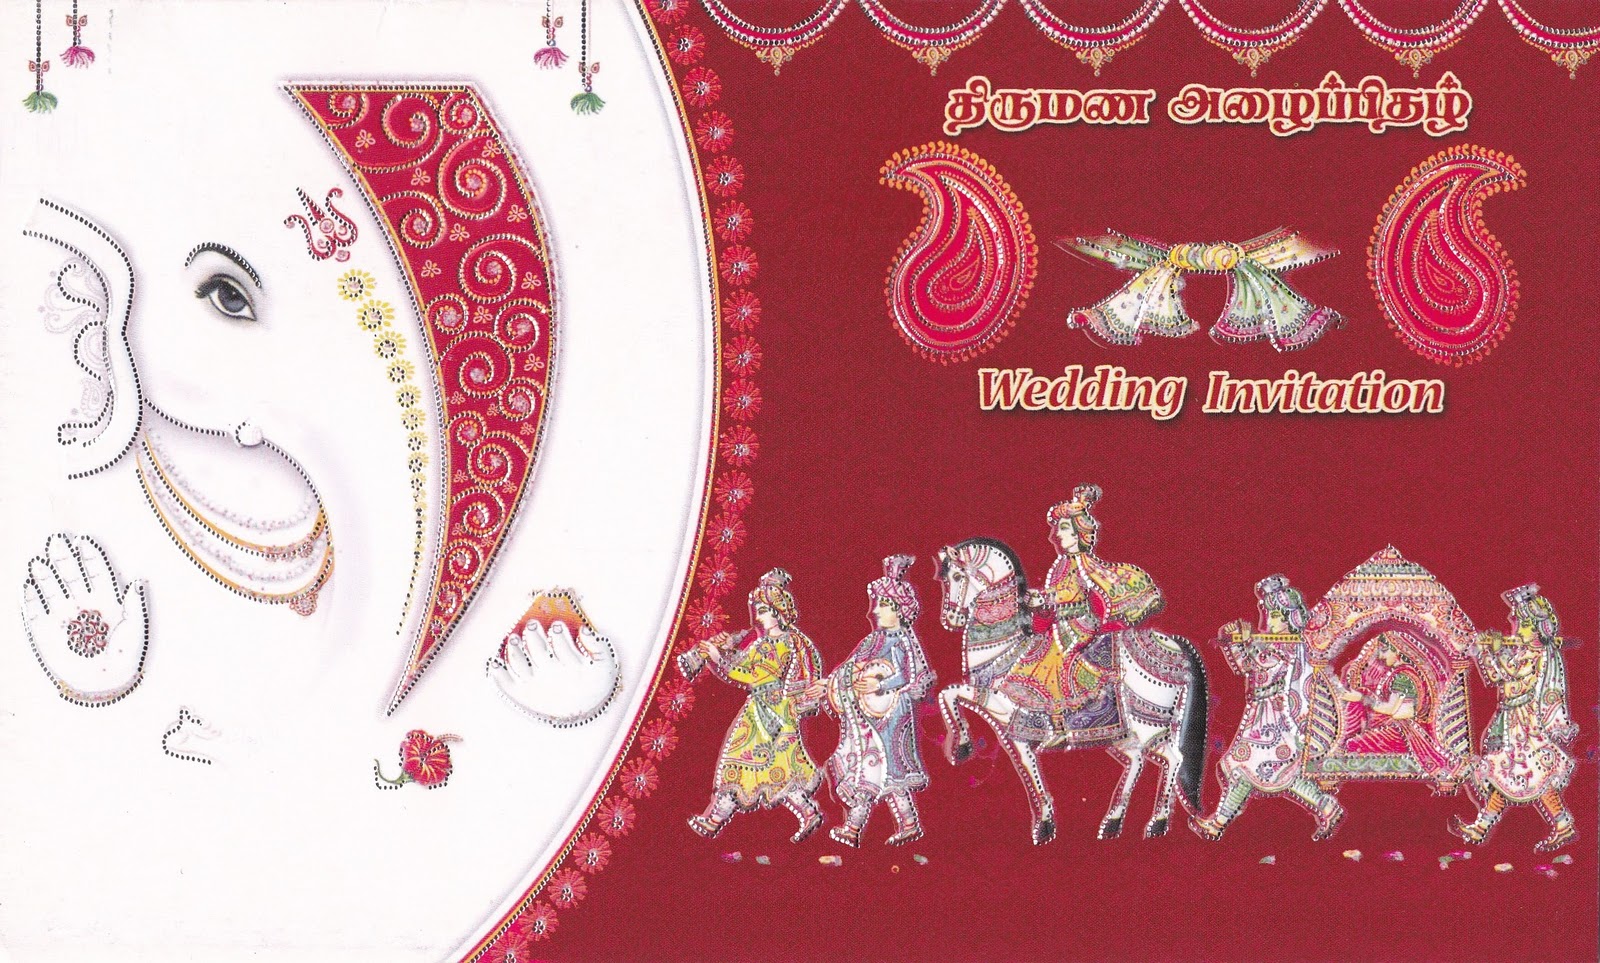 shaadi cards printers karachi wedding cards printers karachi shaadi cards printing in karachi wedding cards 9